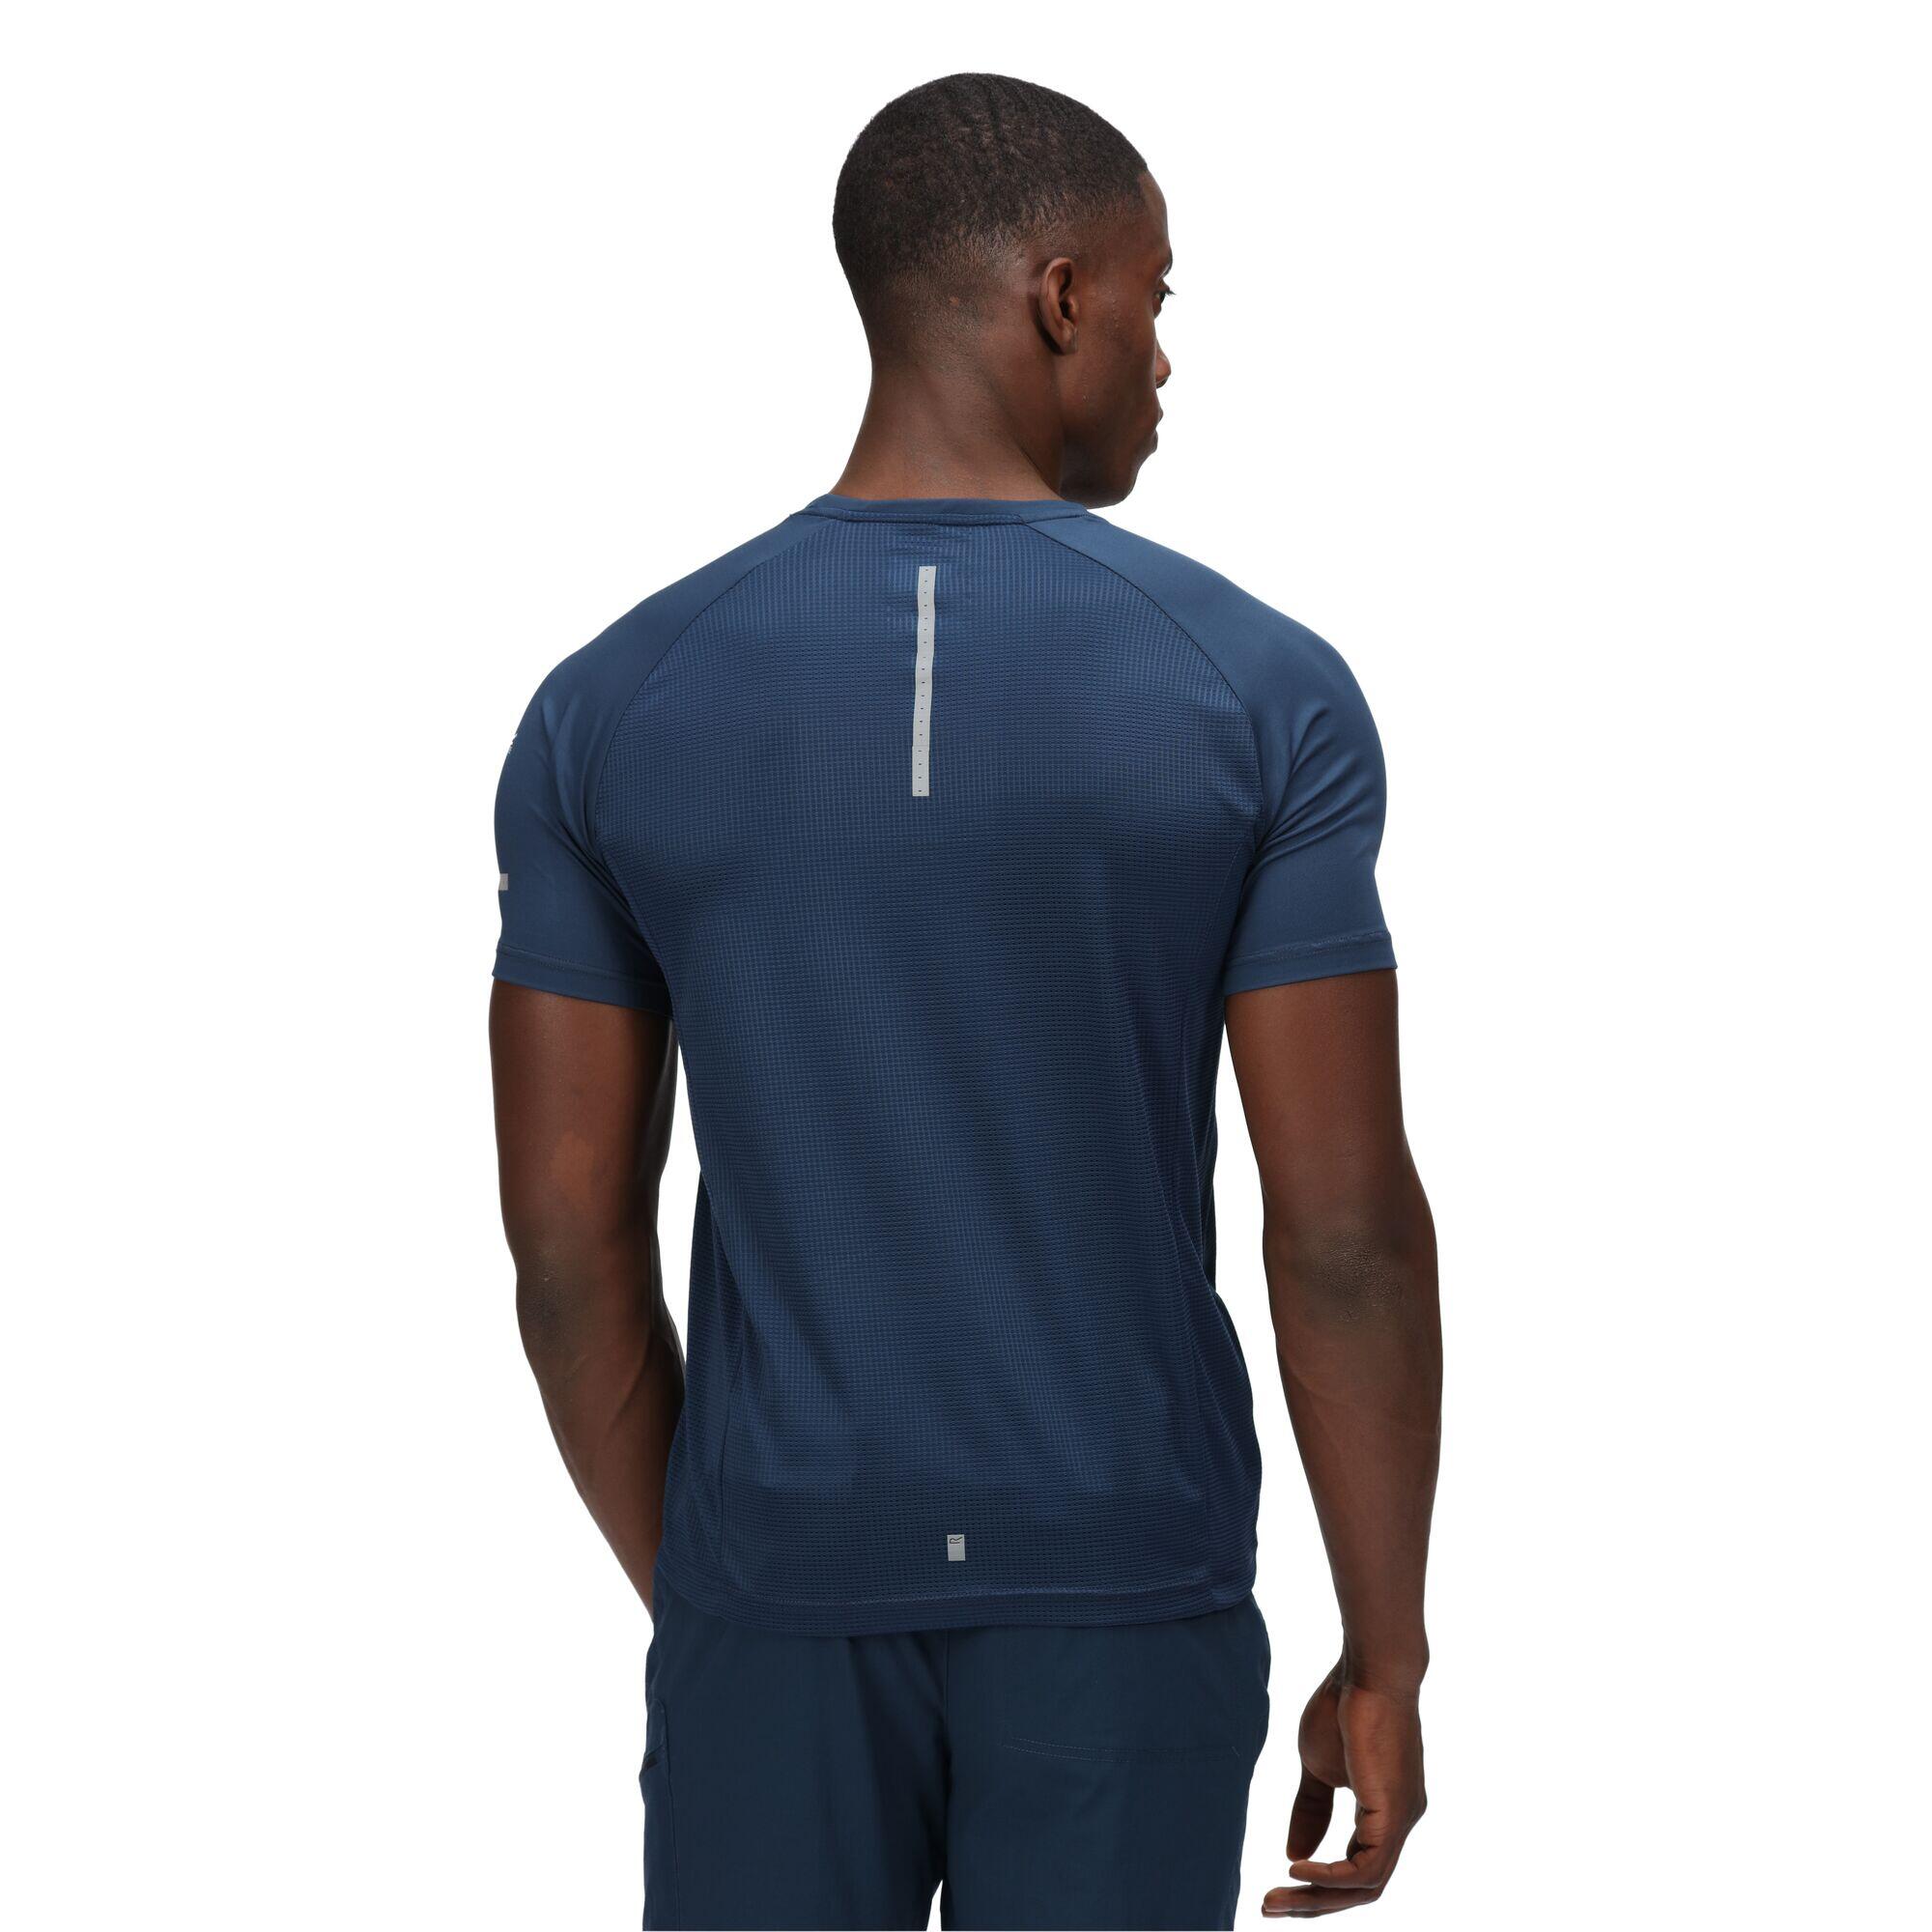 Highton Pro Men's Walking Short Sleeve T-Shirt - Moonlight Denim 2/5